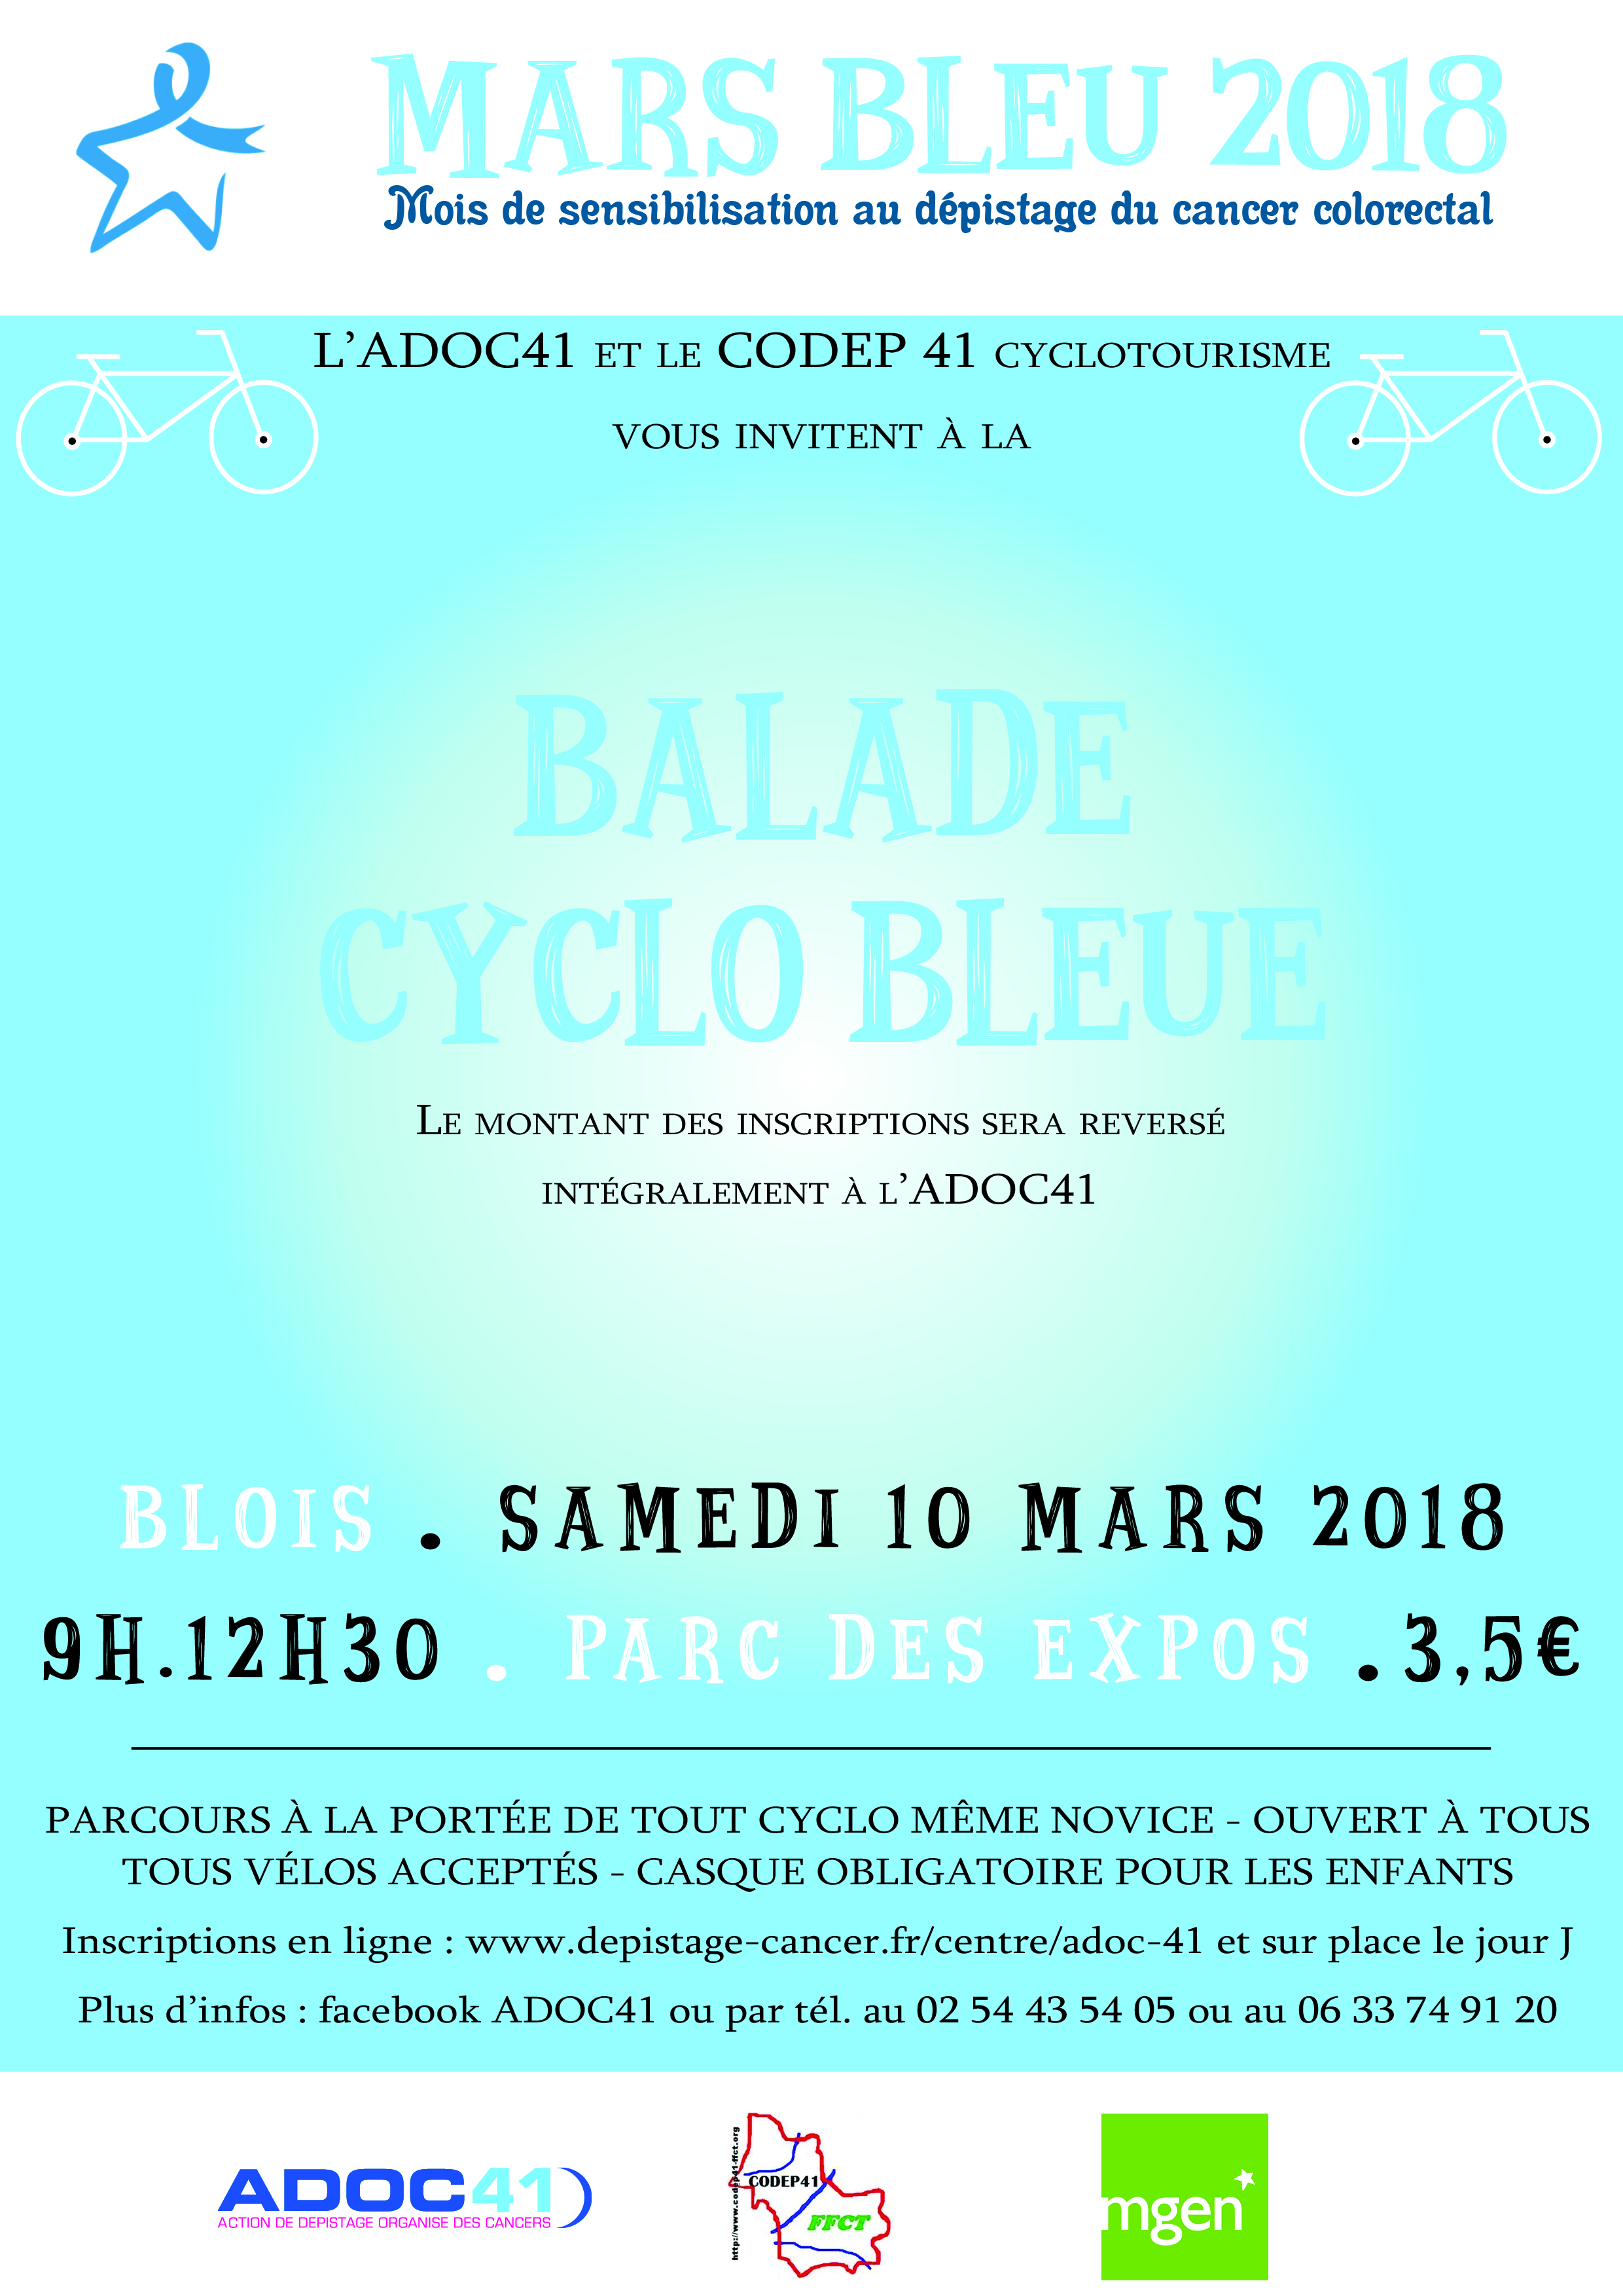 Affiche balade cyclo bleue 2018 mars bleu.jpg